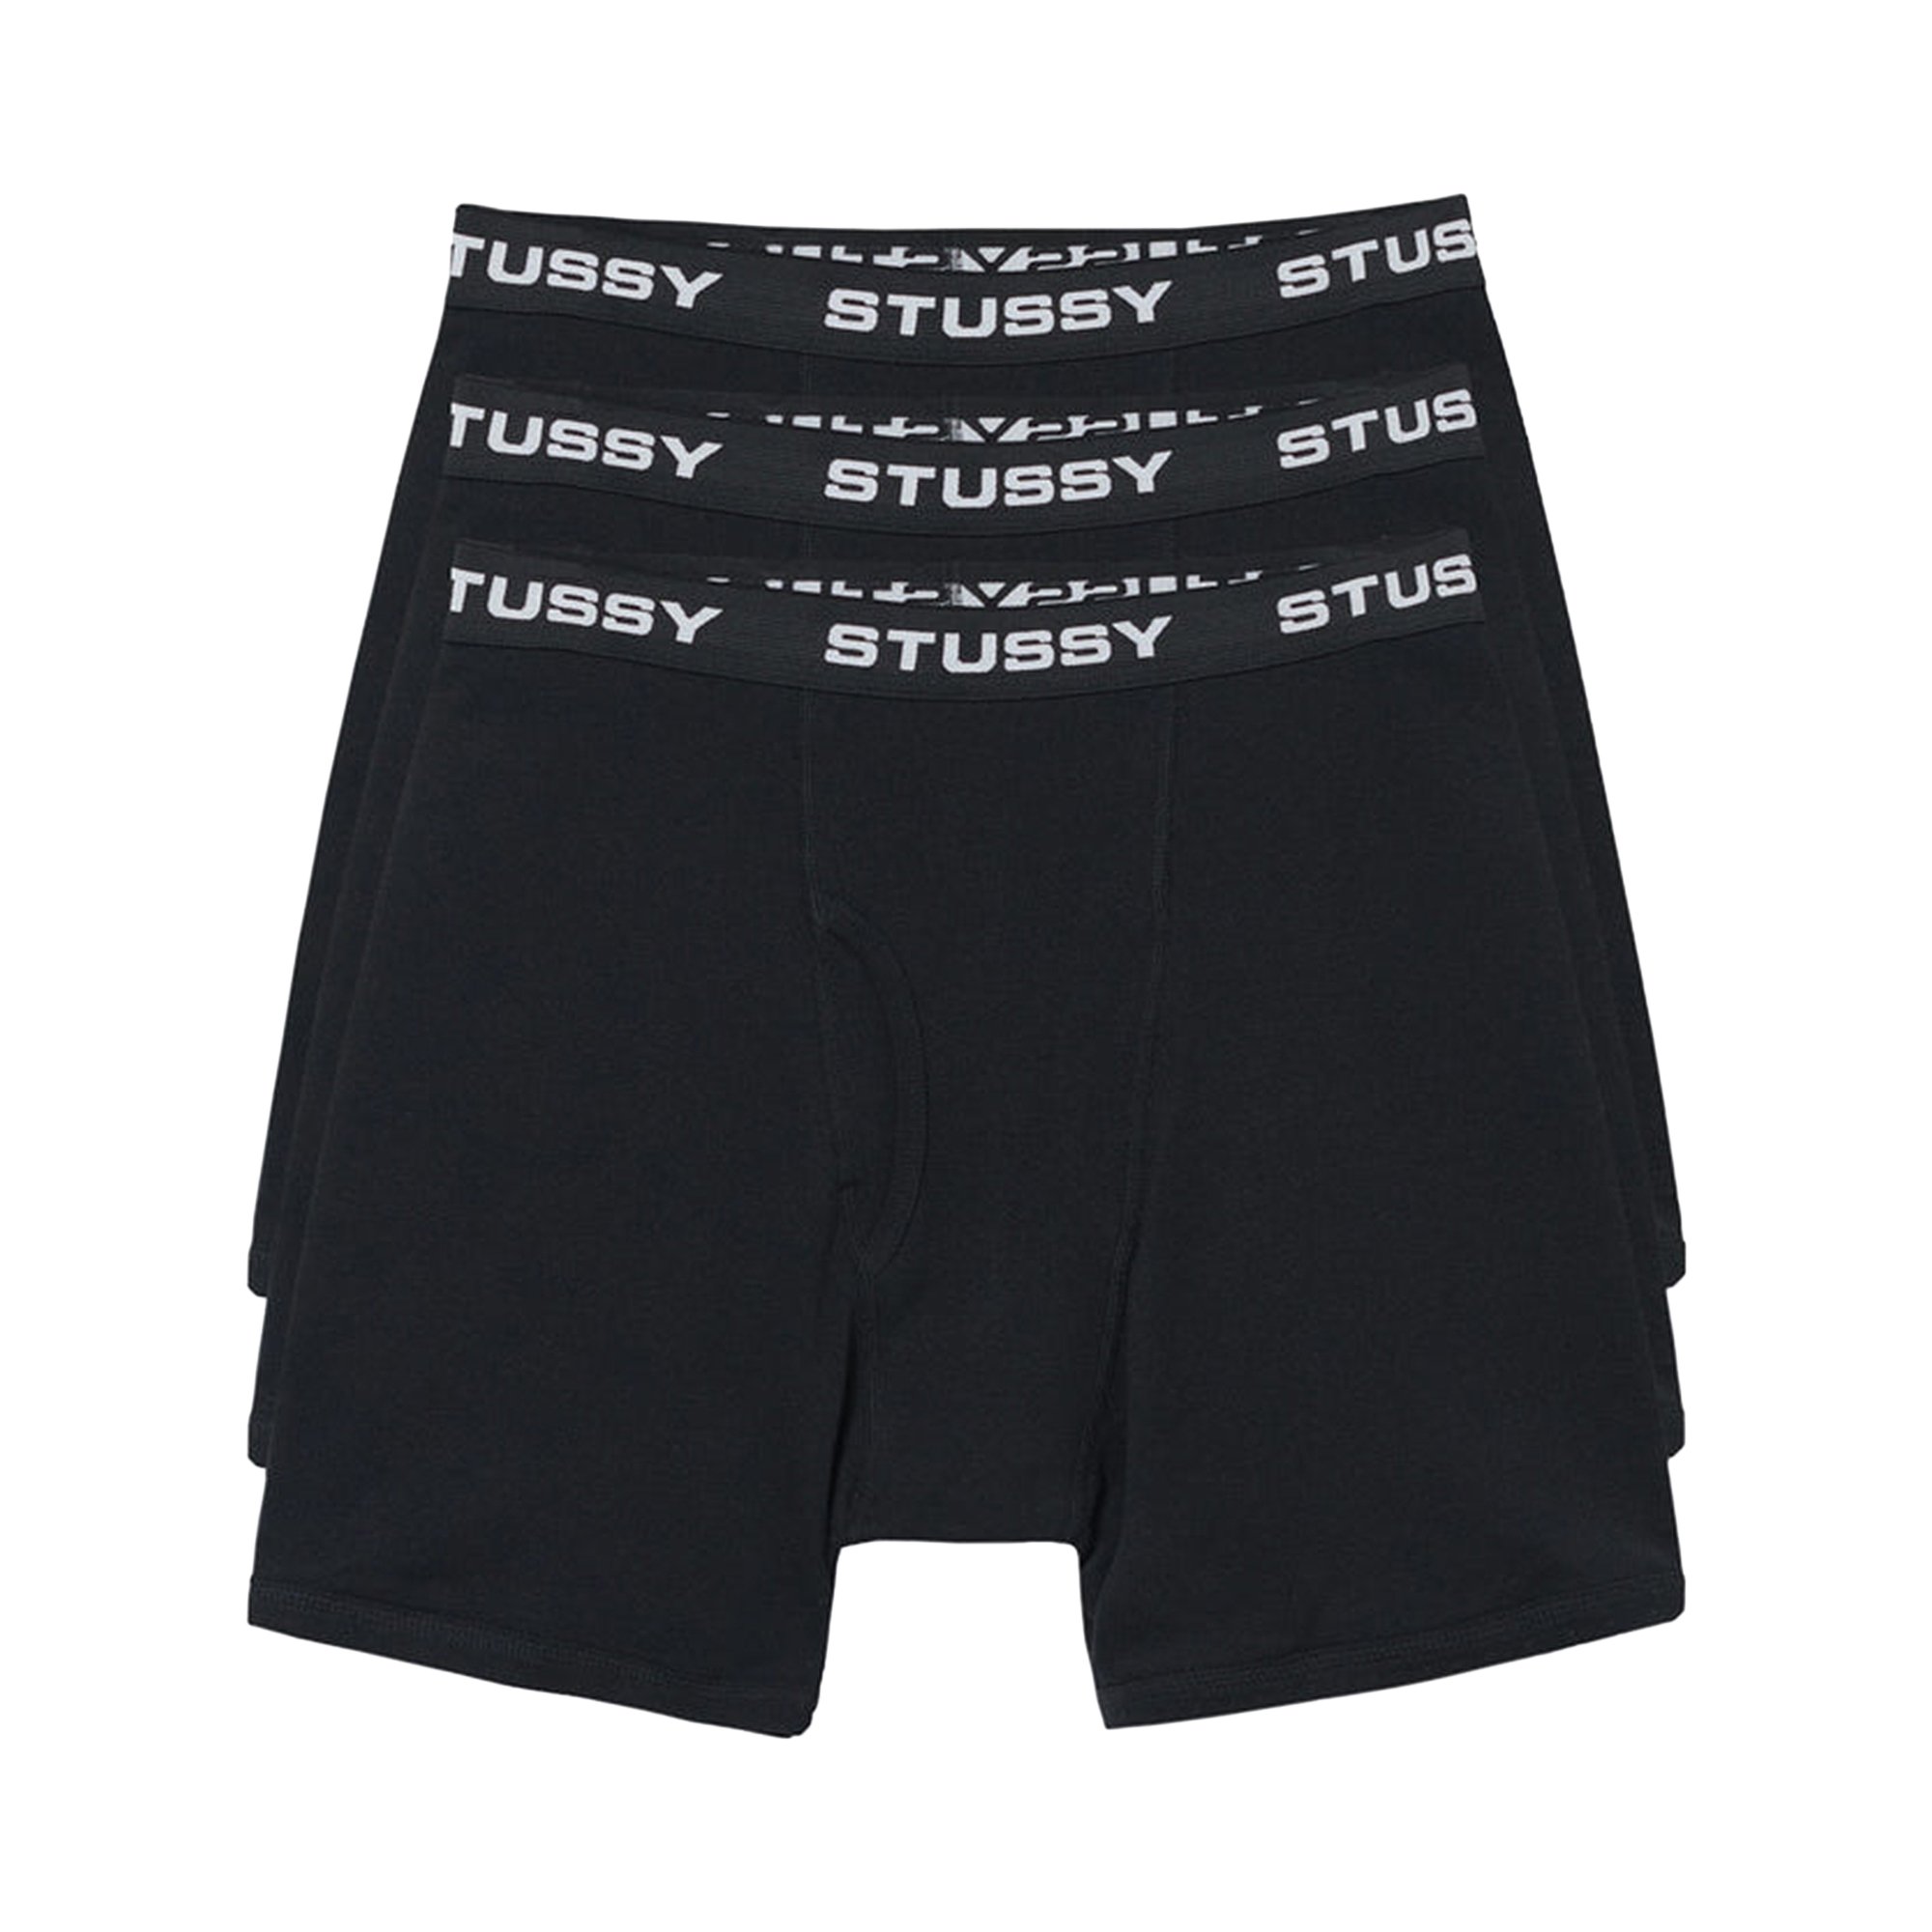 Buy Stussy Boxer Briefs (3 Pack) 'Black' - 112251 BLAC | GOAT